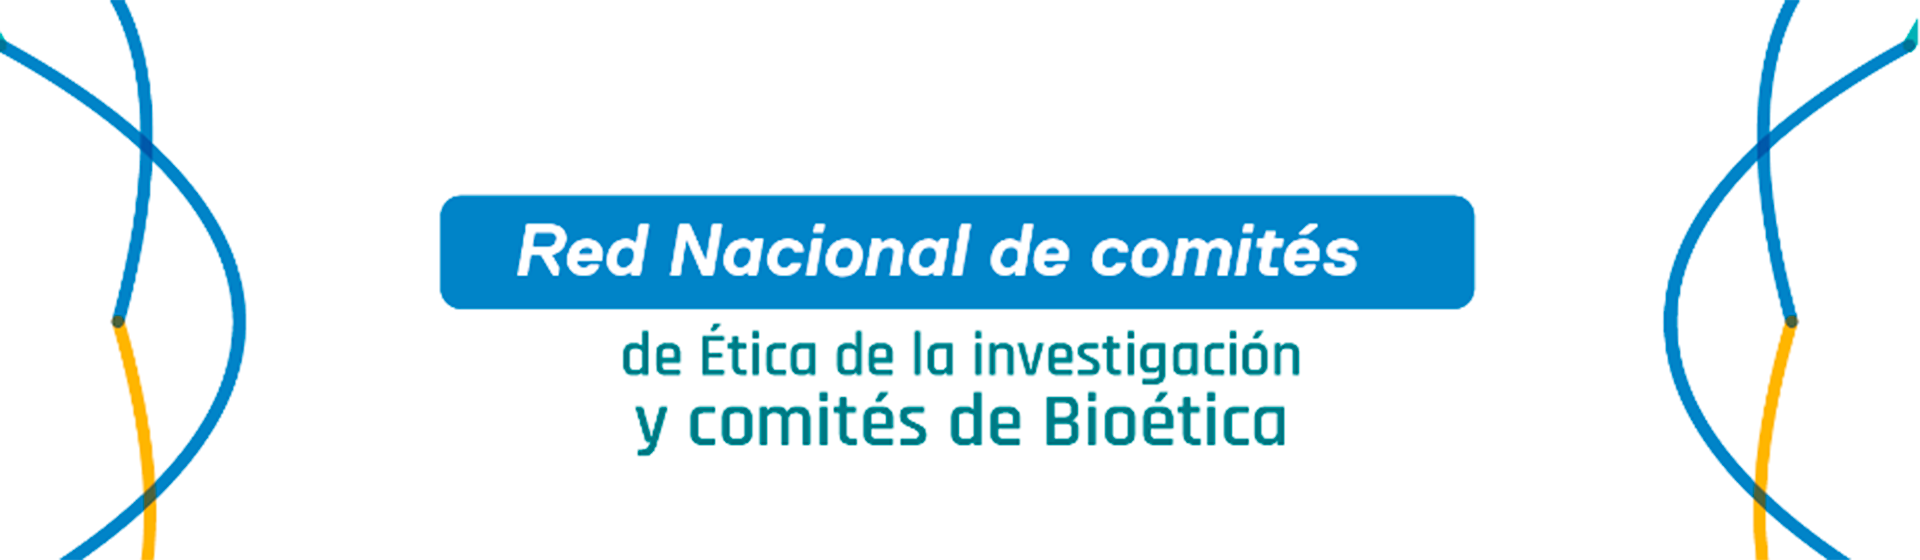 Red Nacional de Comités de Ética y Bioética